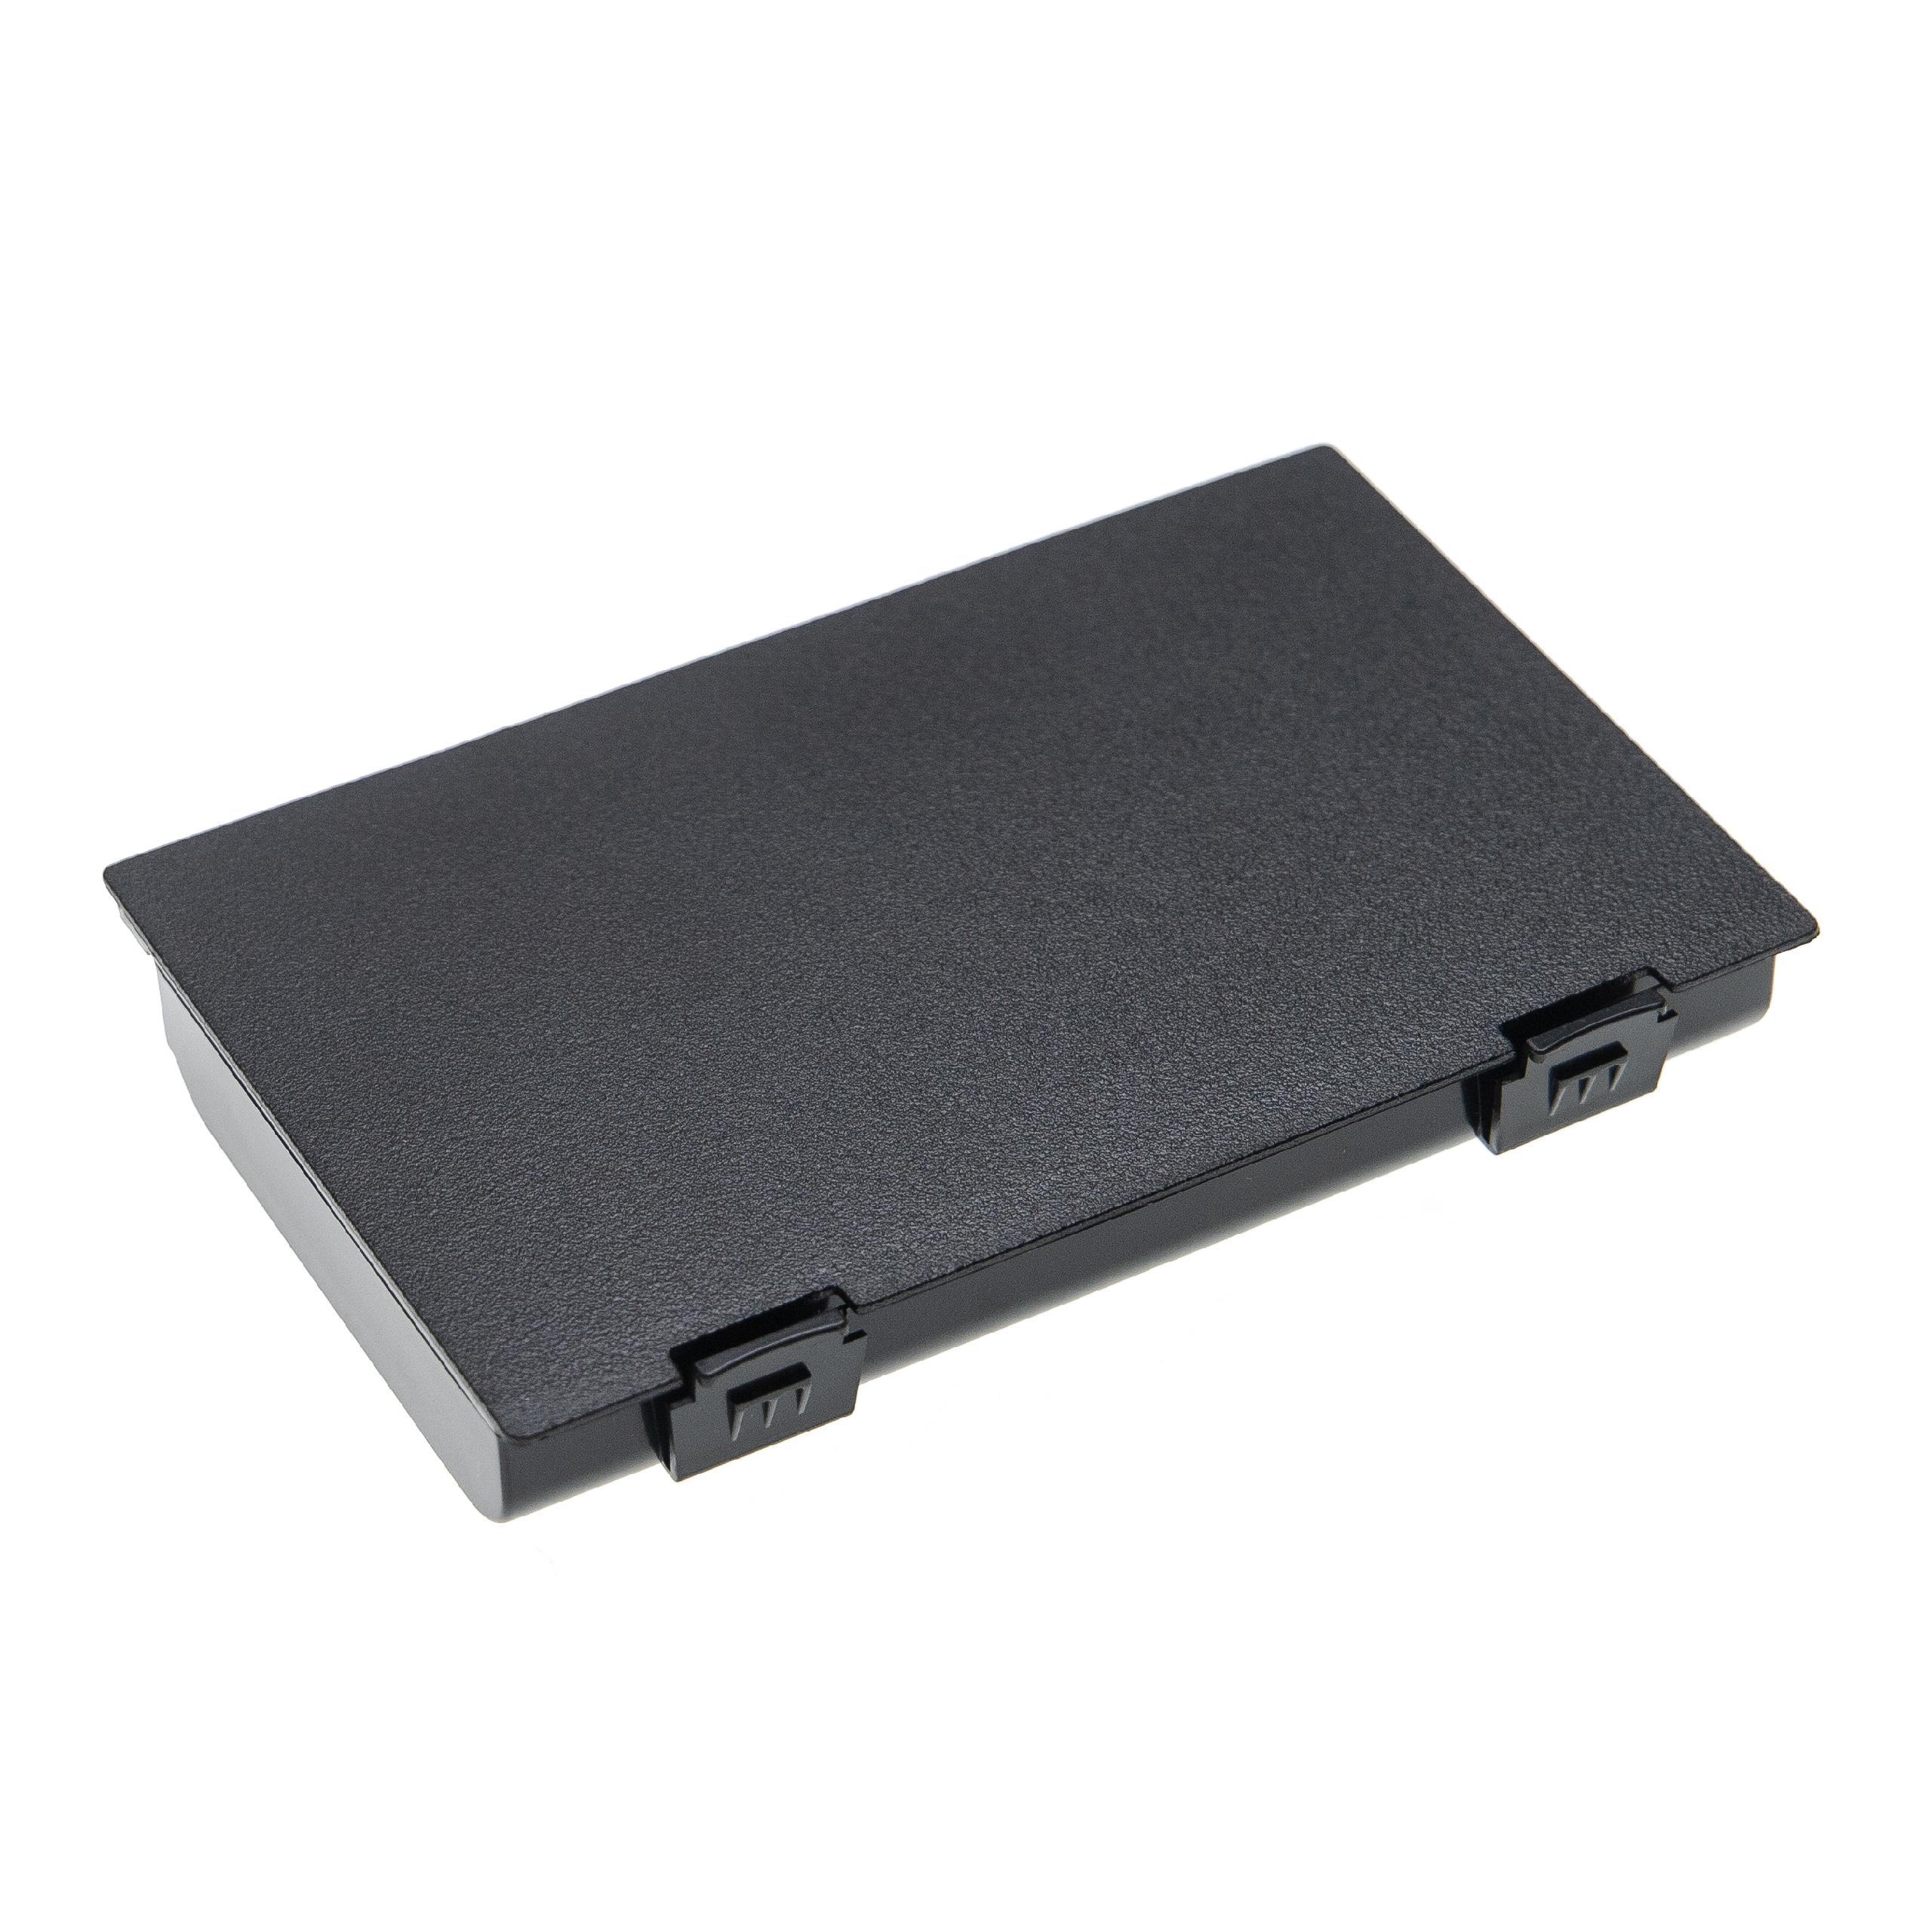 Akumulator do laptopa zamiennik Fujitsu 0644670, CP335311-01, FPCBP175 - 4400 mAh 14,4 V Li-Ion, czarny